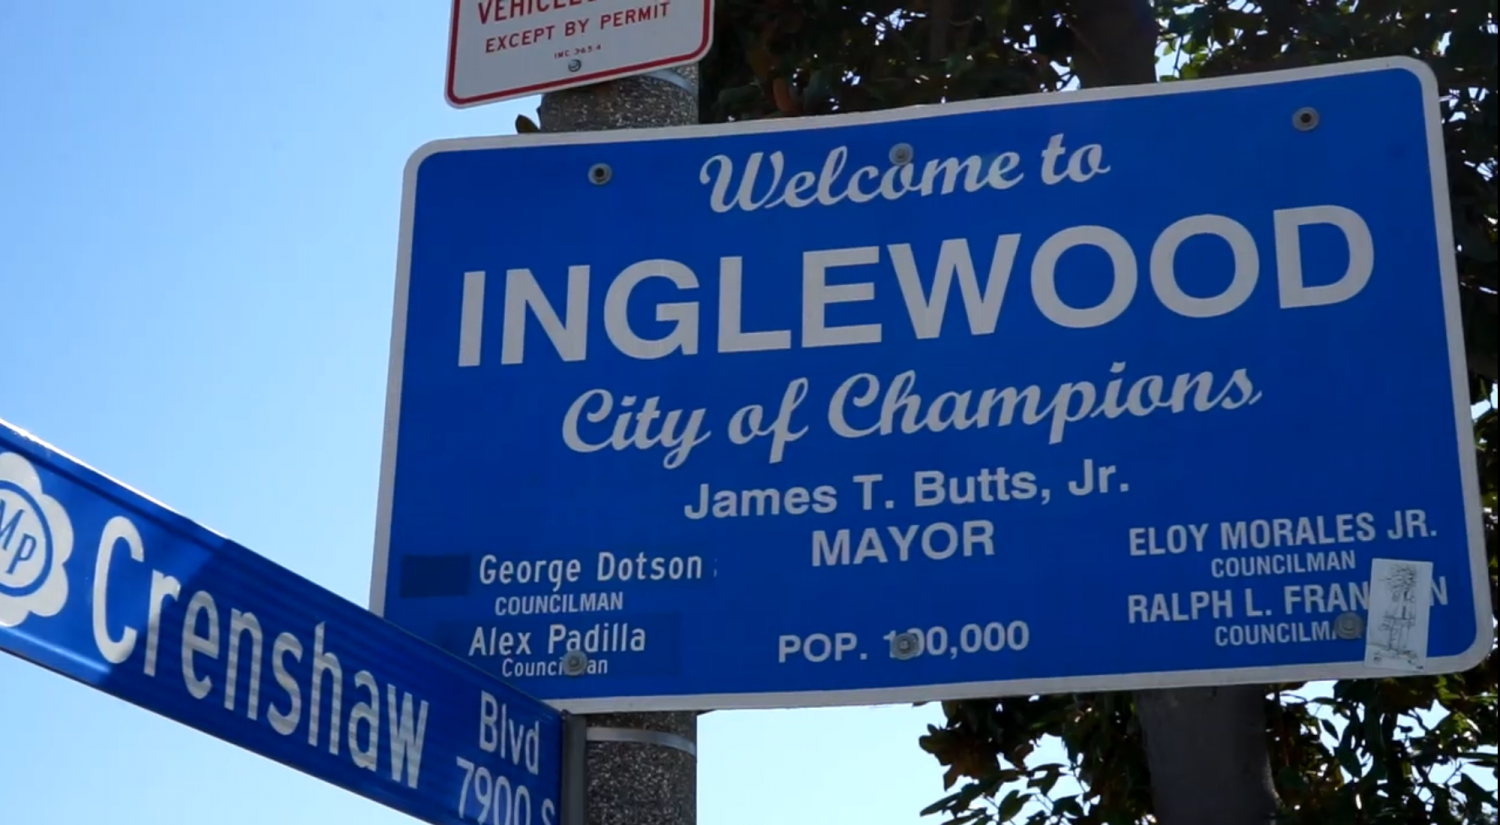 The City of Inglewood – Inglewood Real Estate - Inglewood Real Estate